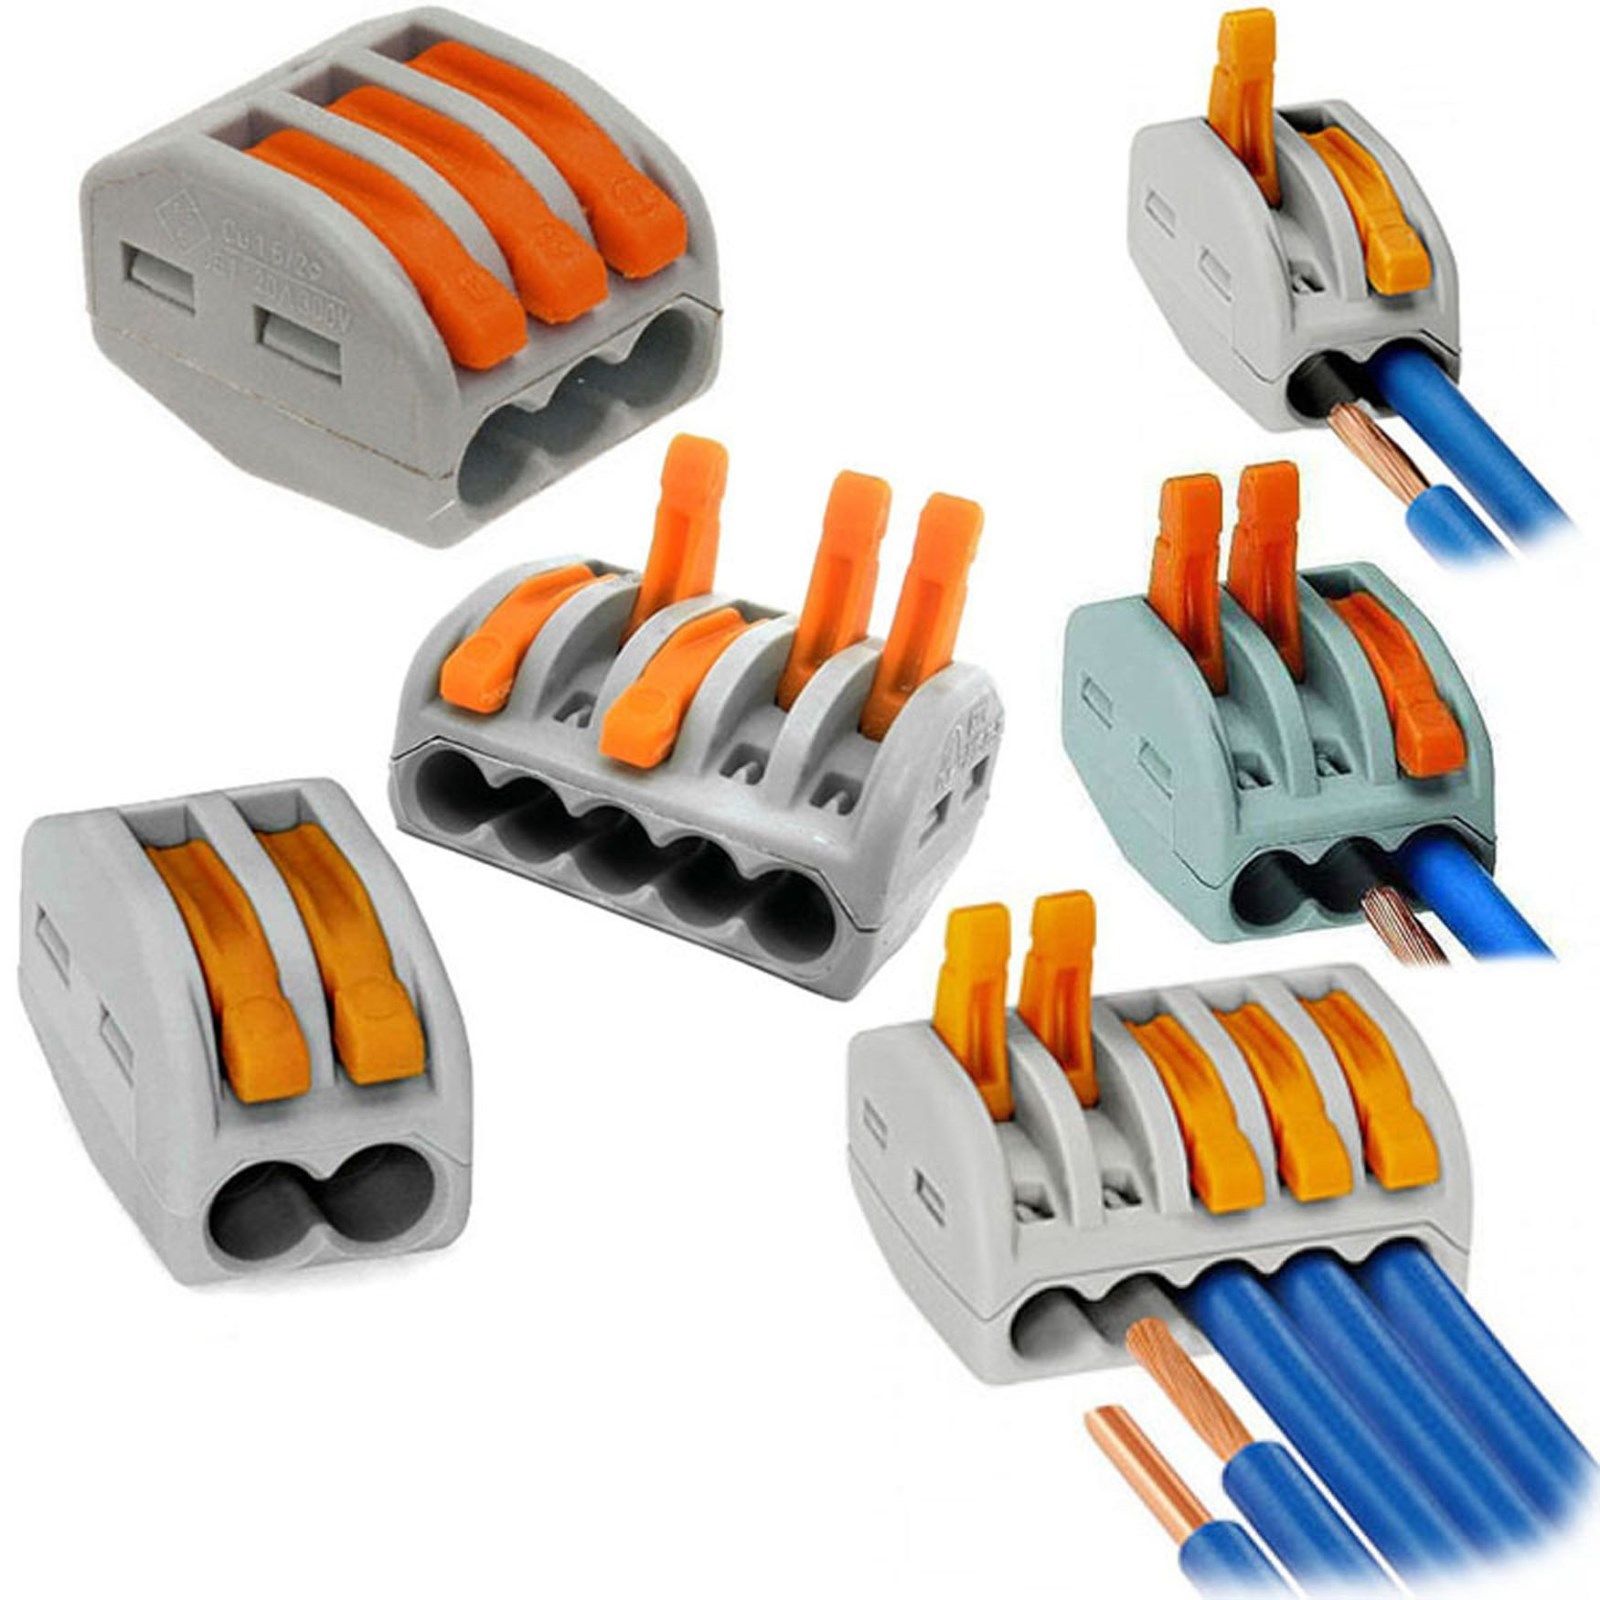 wago lever connectors